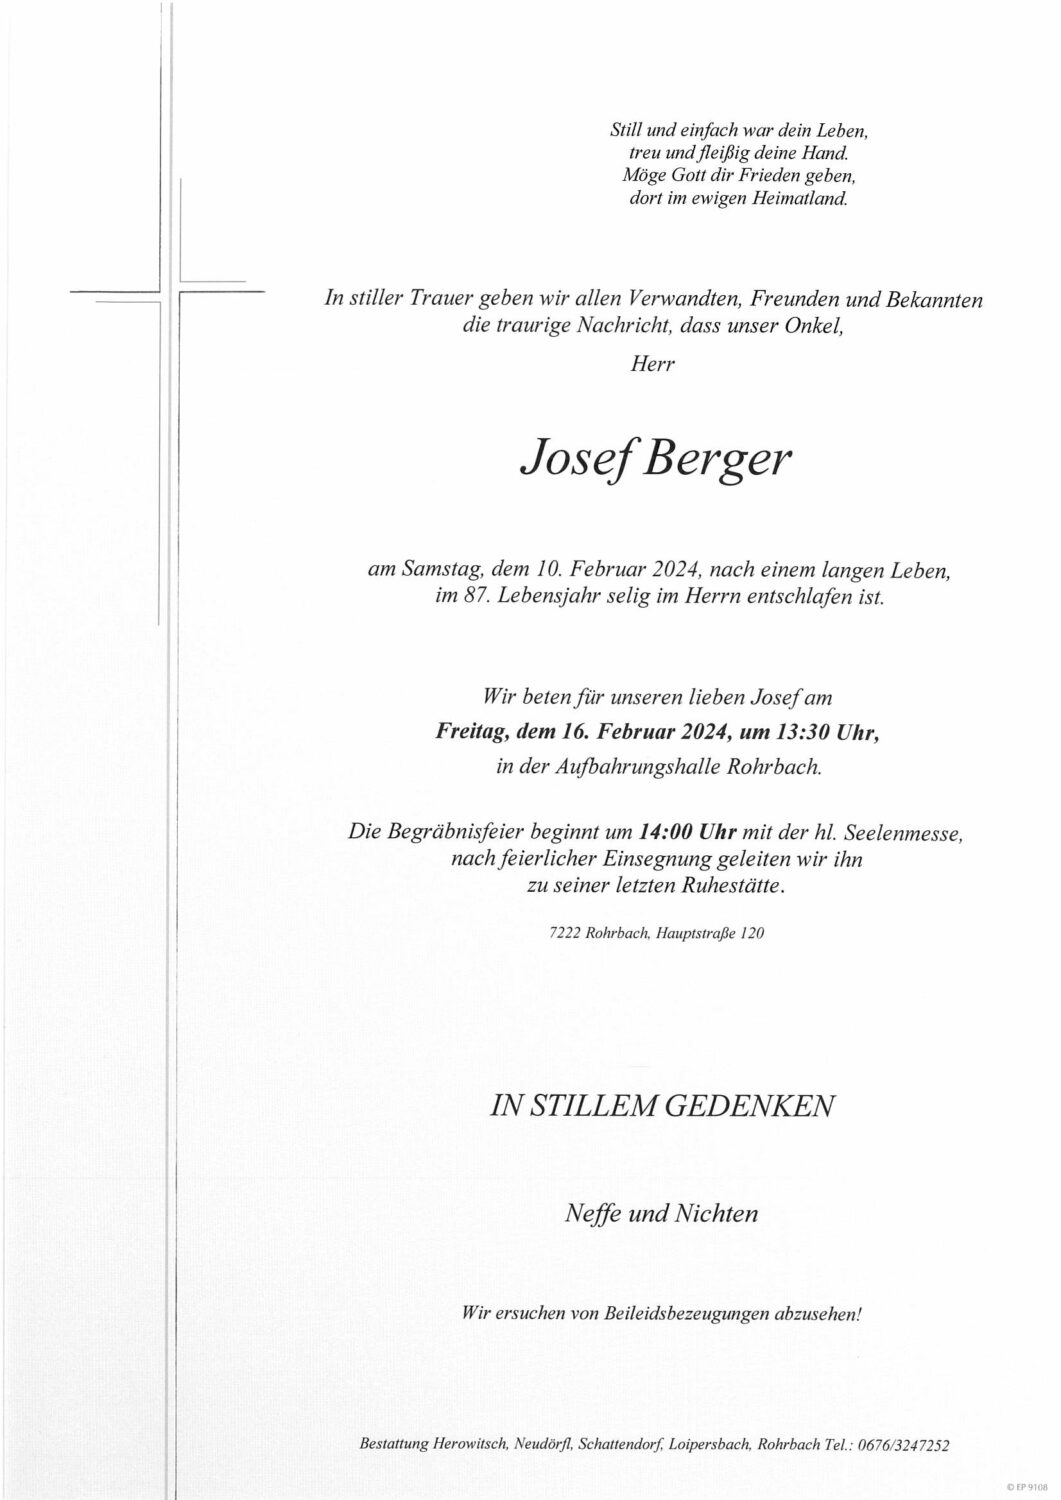 Josef Berger